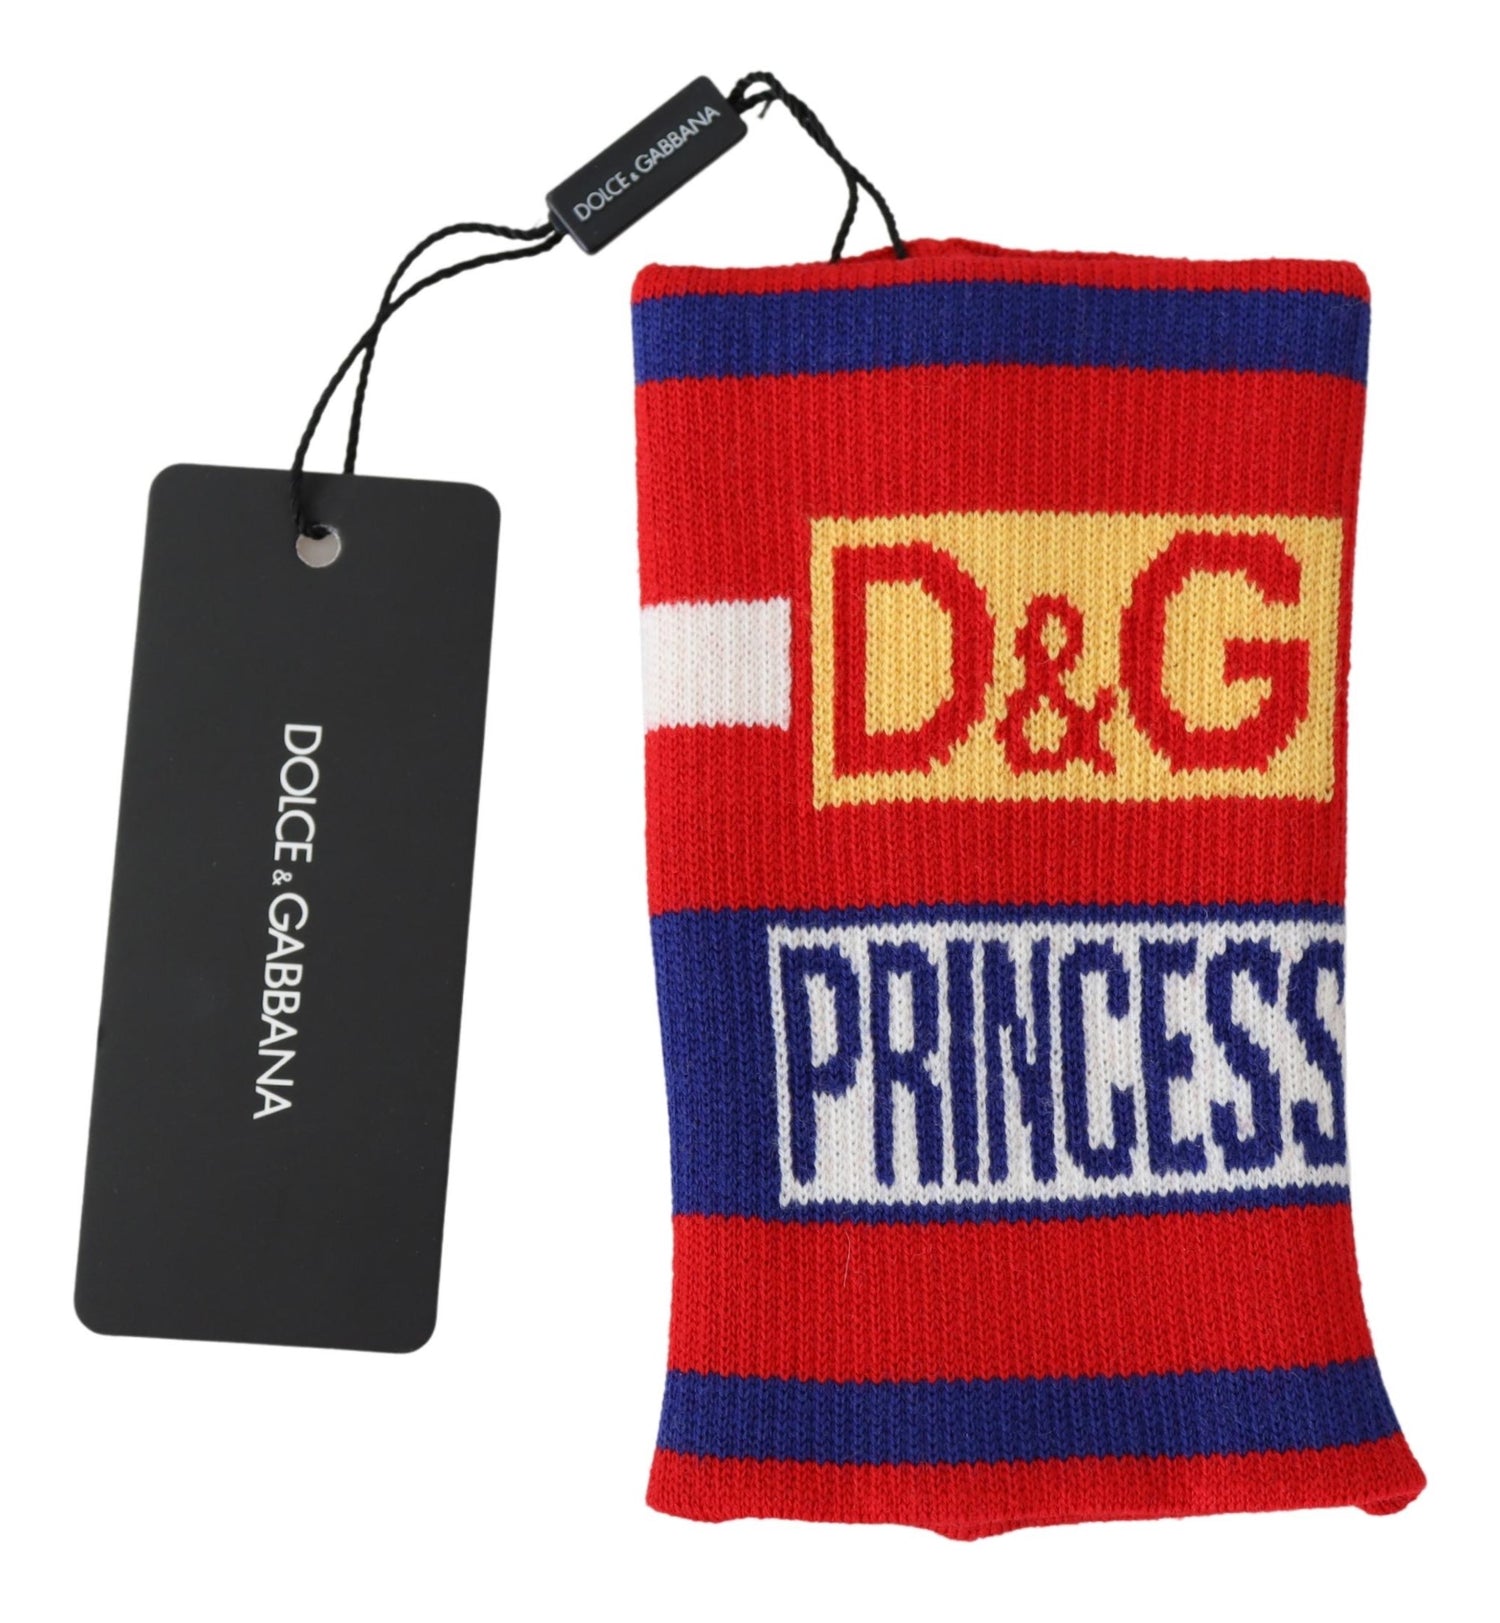 Multicolor Wool D&G Princess Wristband Wrap